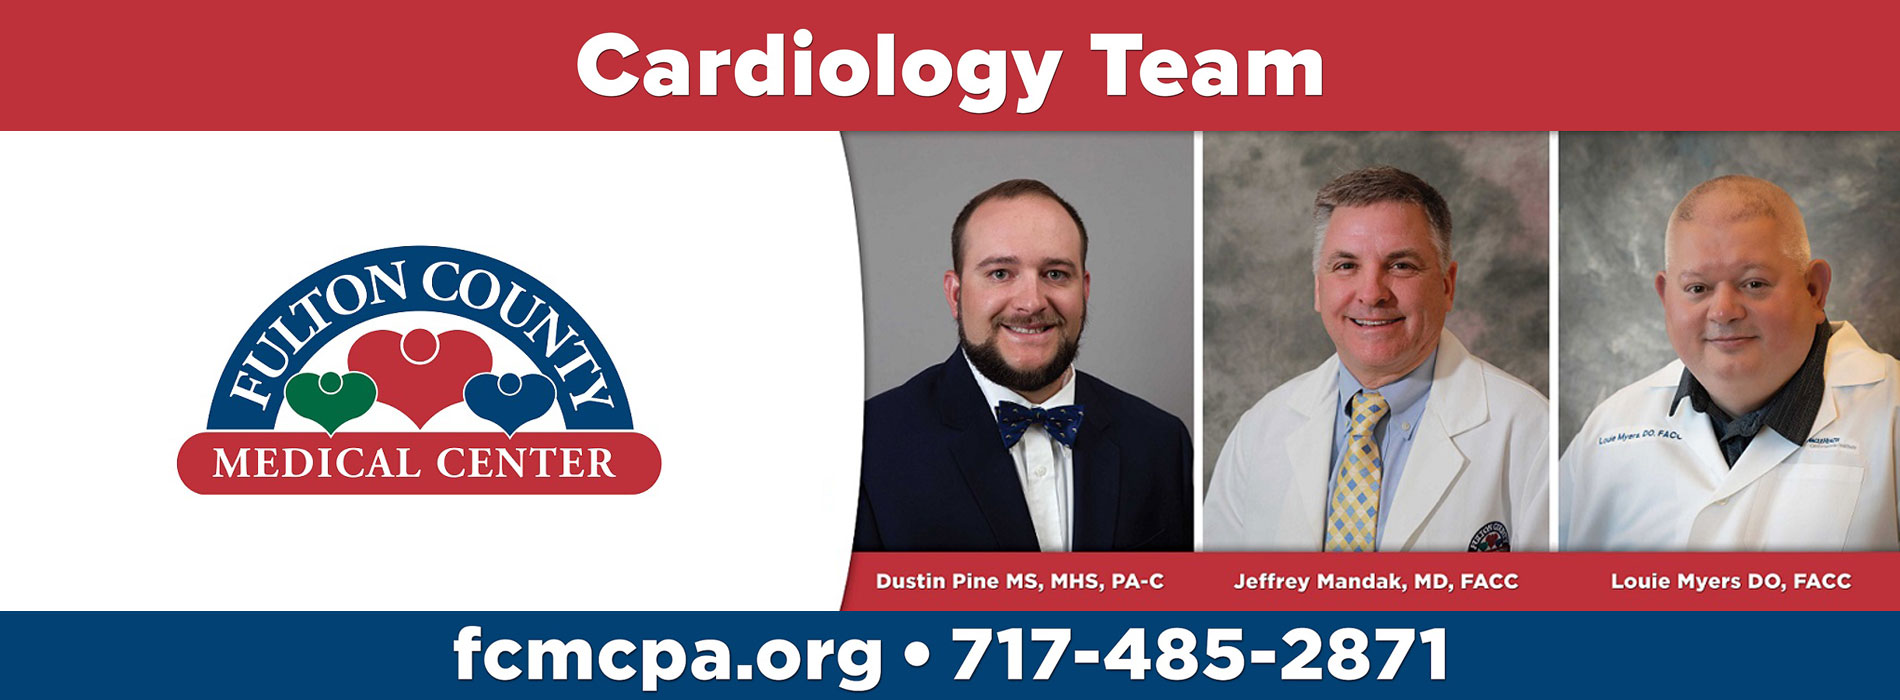 Fulton County Cardiology Team

Dustin Pine MS, MHS, PA-C
Jeffery Mandak, MD, FACC
Louie Myers DO, FACC